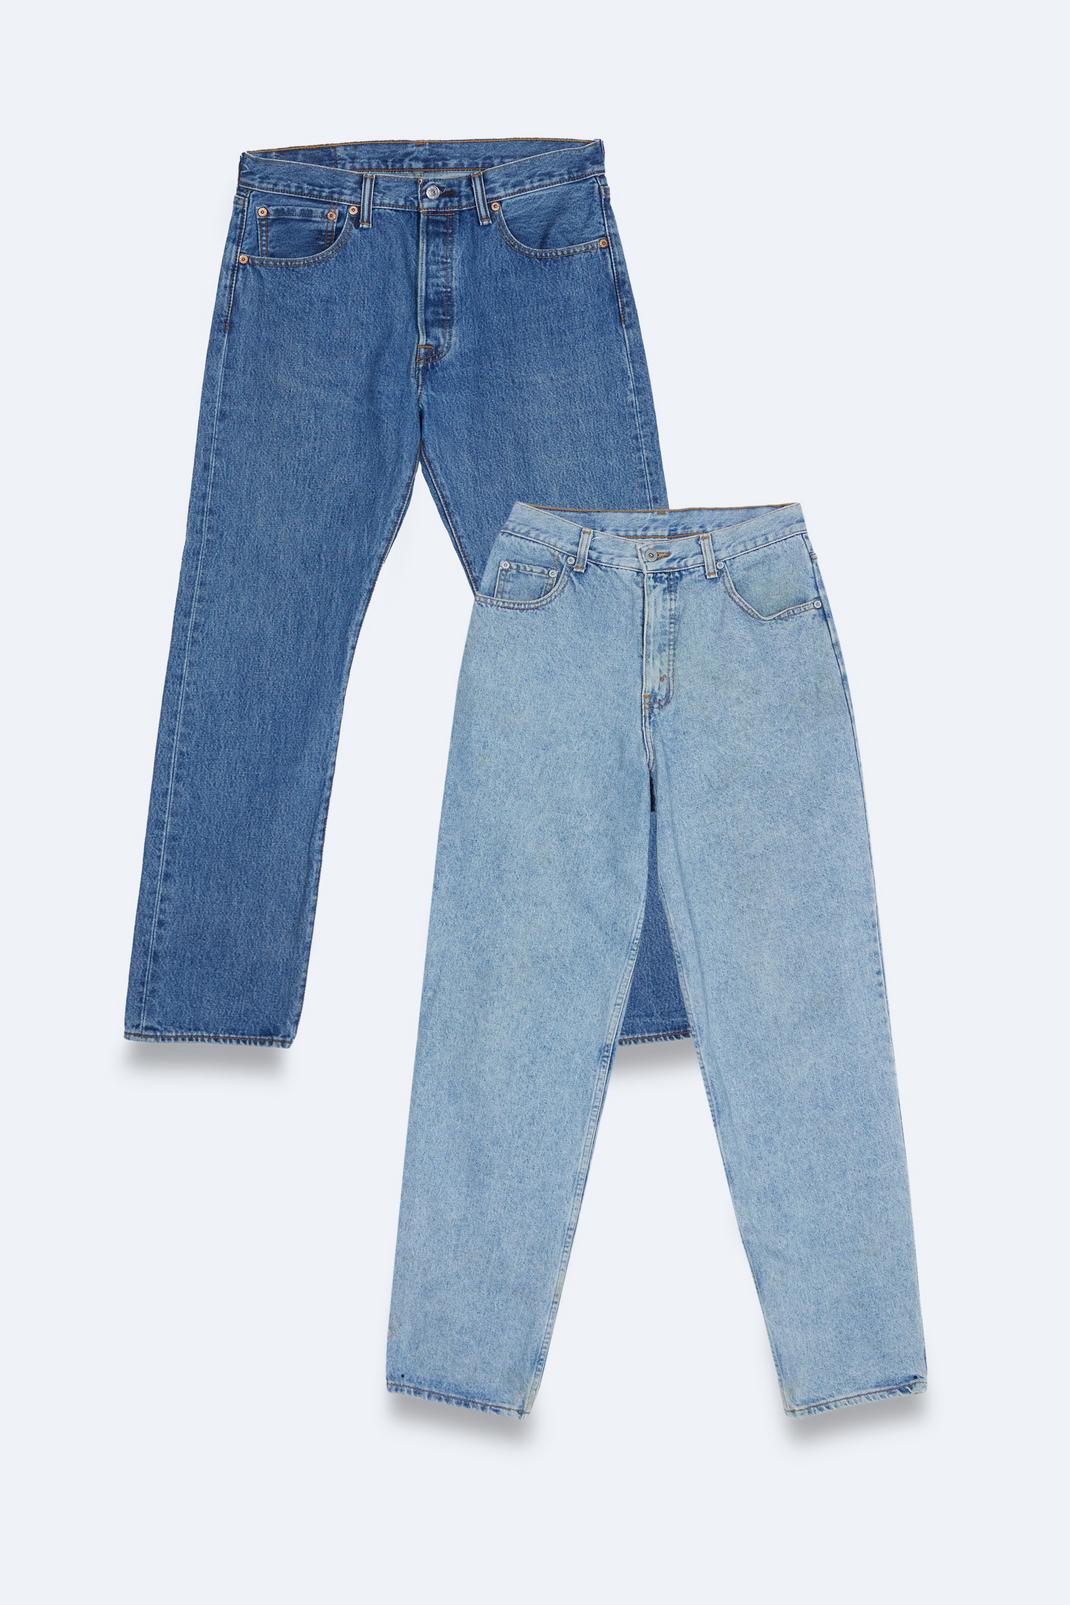 https://media.nastygal.com/i/nastygal/bgg17108_mid%20blue_xl/female-mid%20blue-vintage-levi-jeans/?w=1070&qlt=default&fmt.jp2.qlt=70&fmt=auto&sm=fit